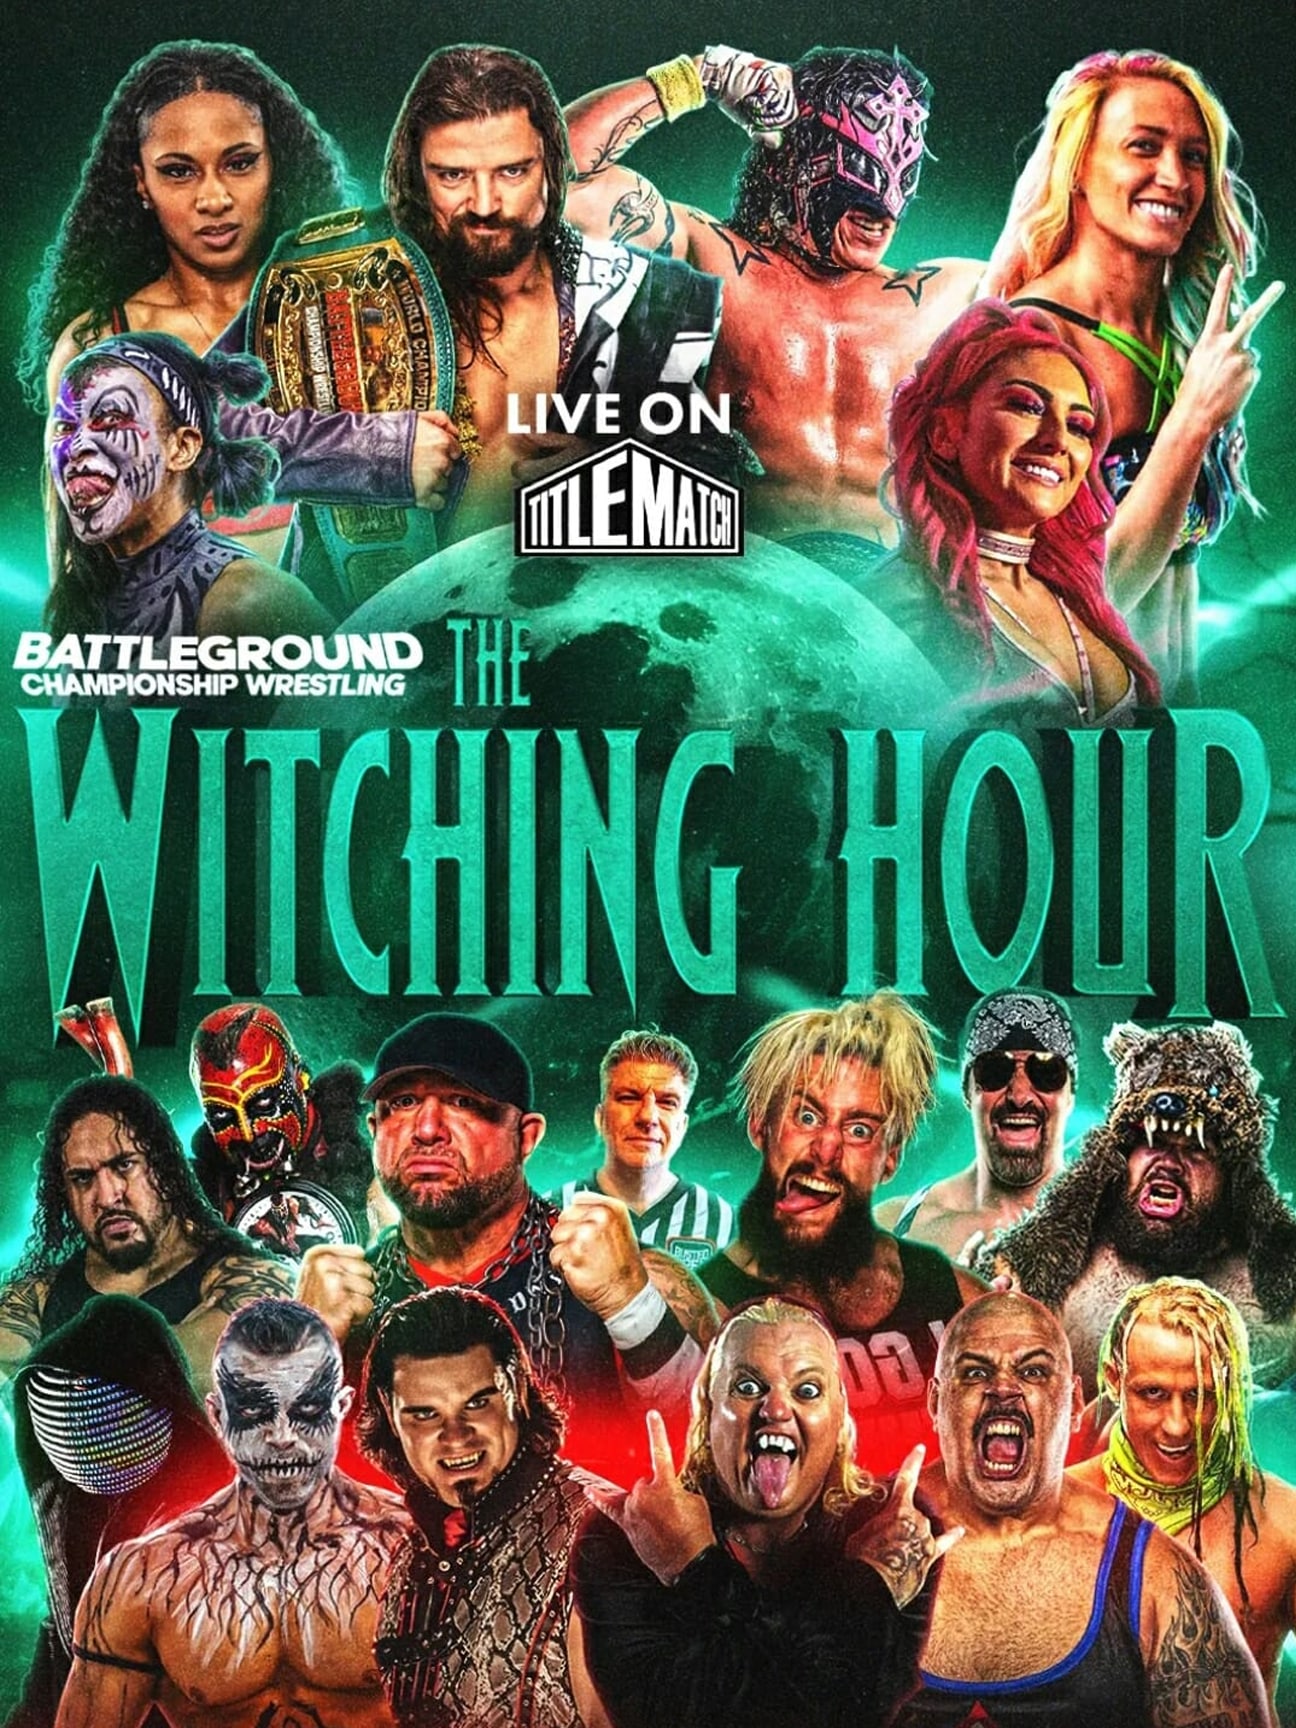 Battleground Championship Wrestling – The Witching Hour